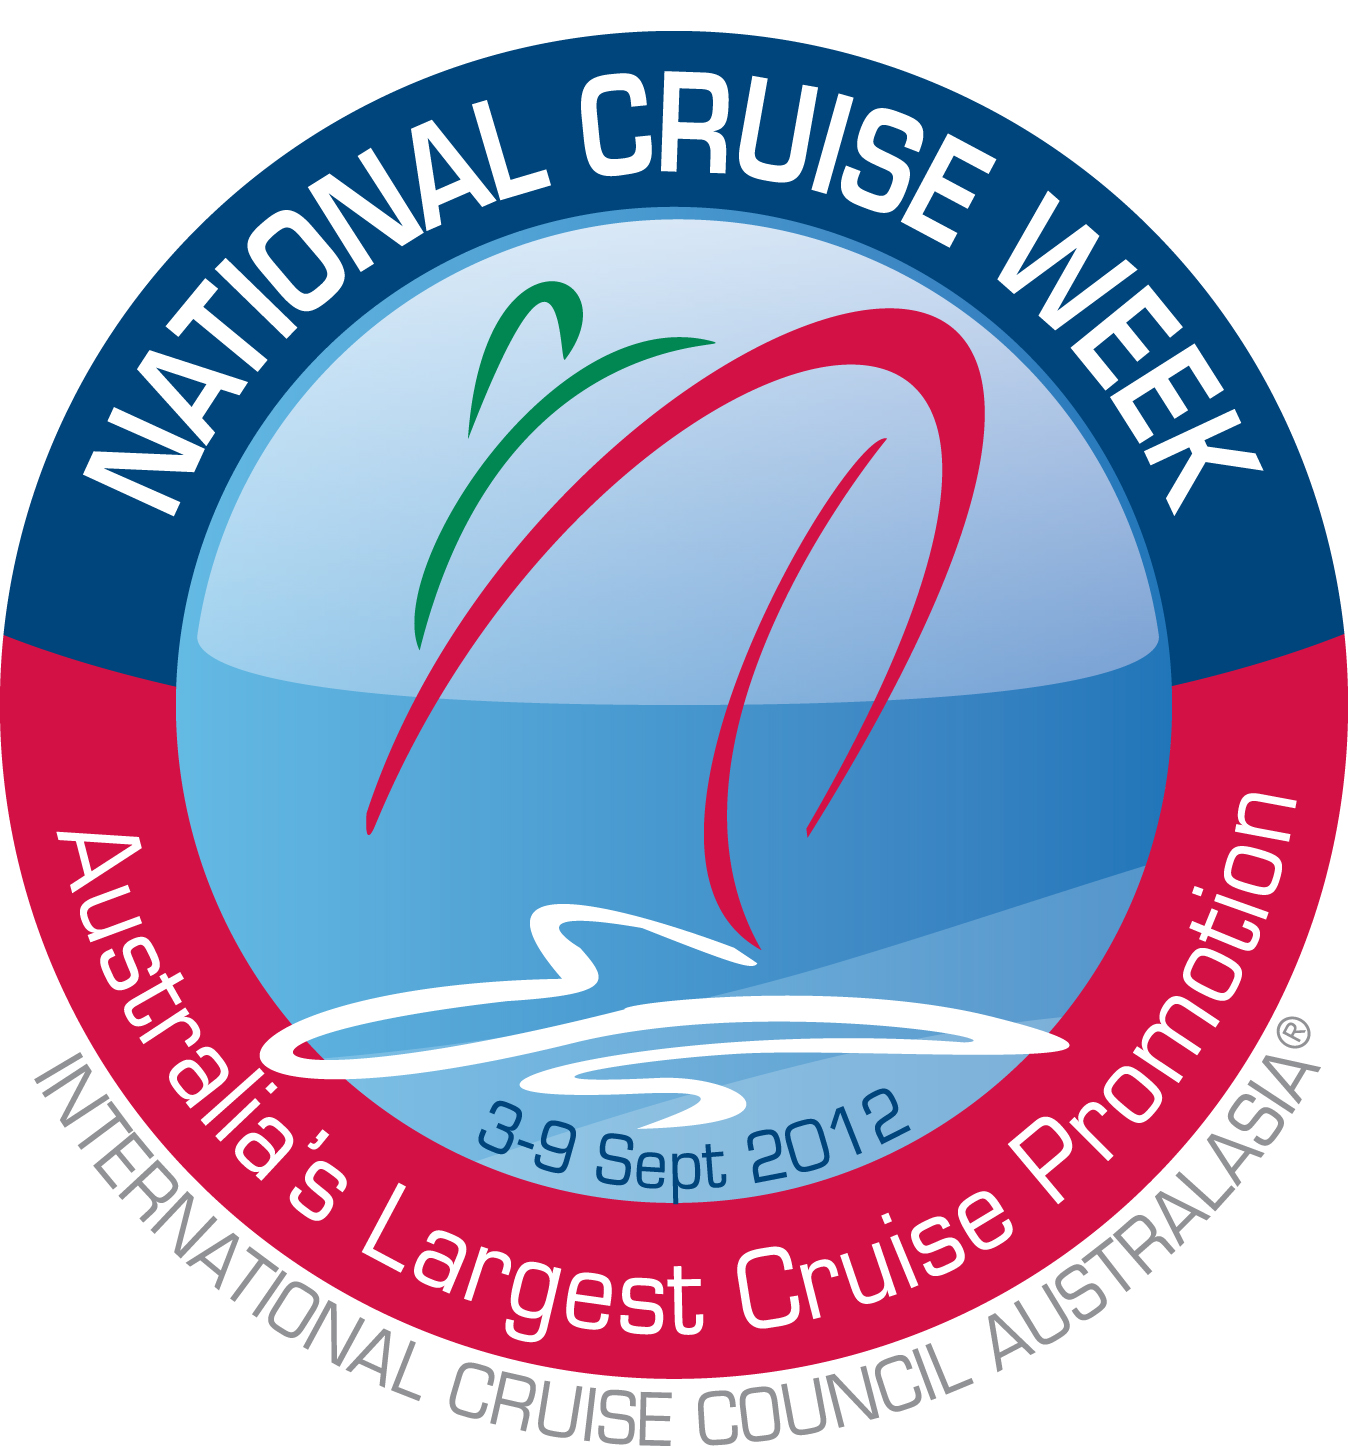 05156 Cruise Council logo v9 aus flt.jpg